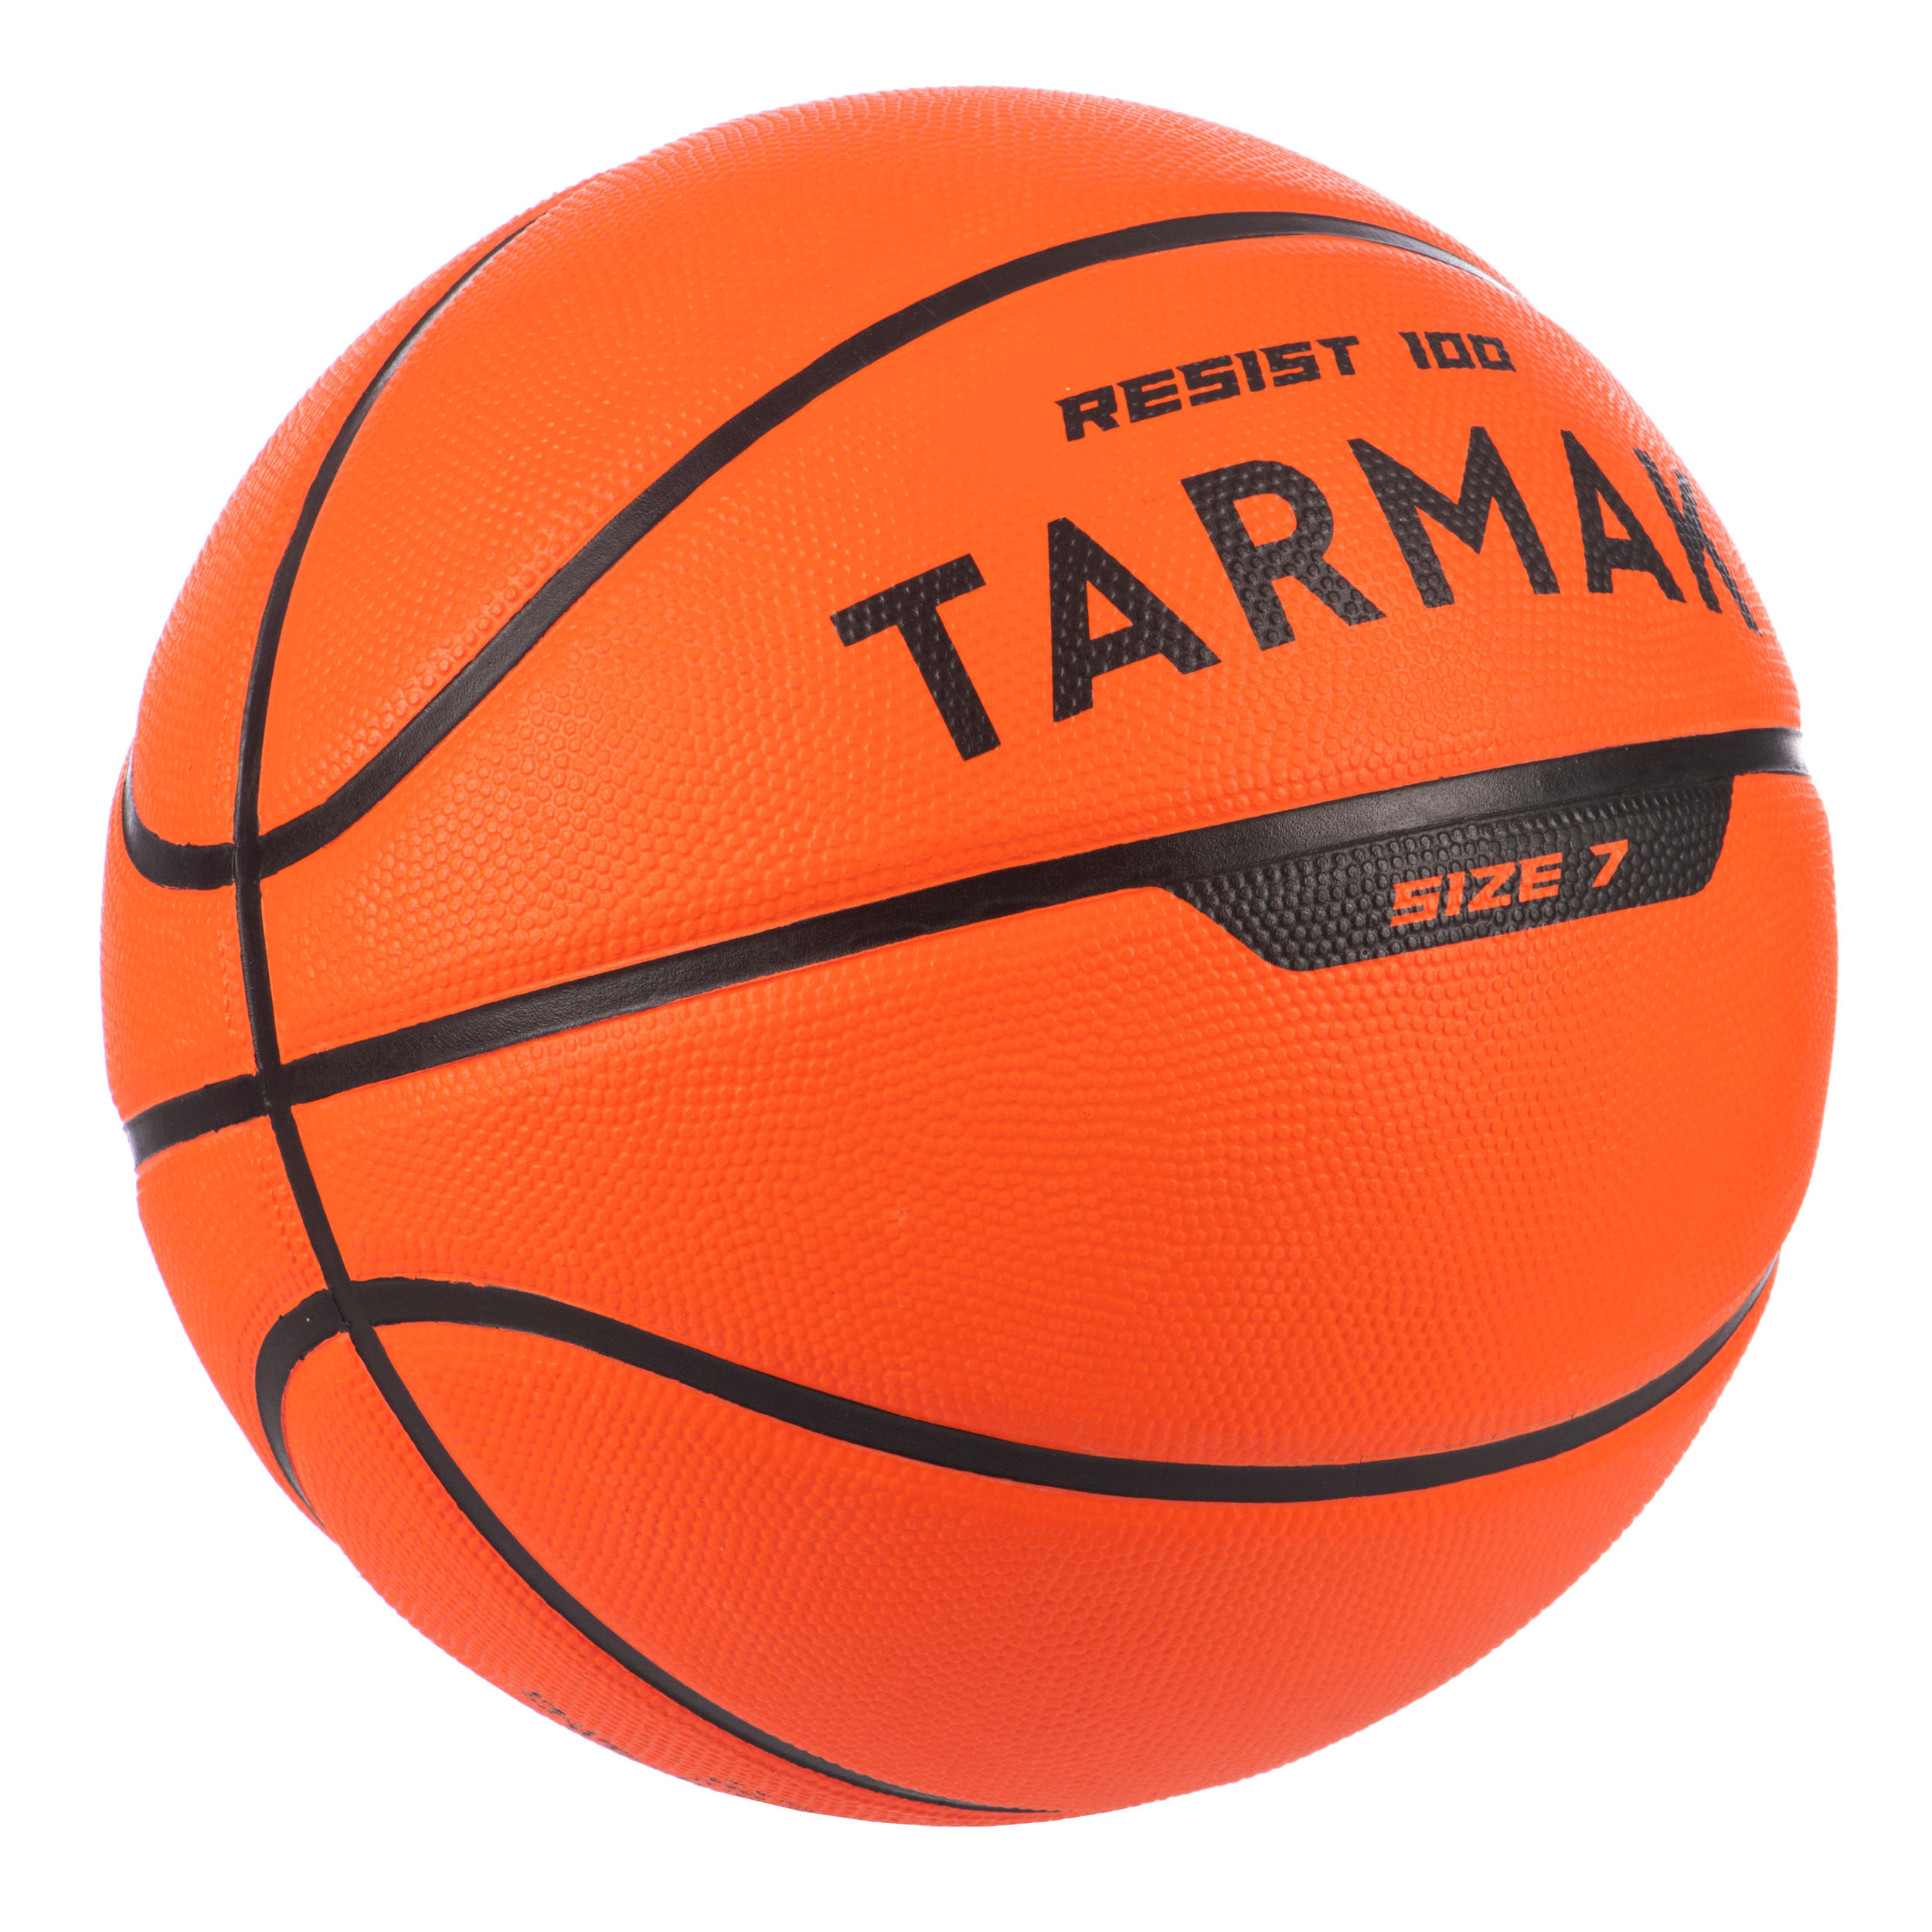 Size 7 Basketball Ball - R 100 - TARMAK